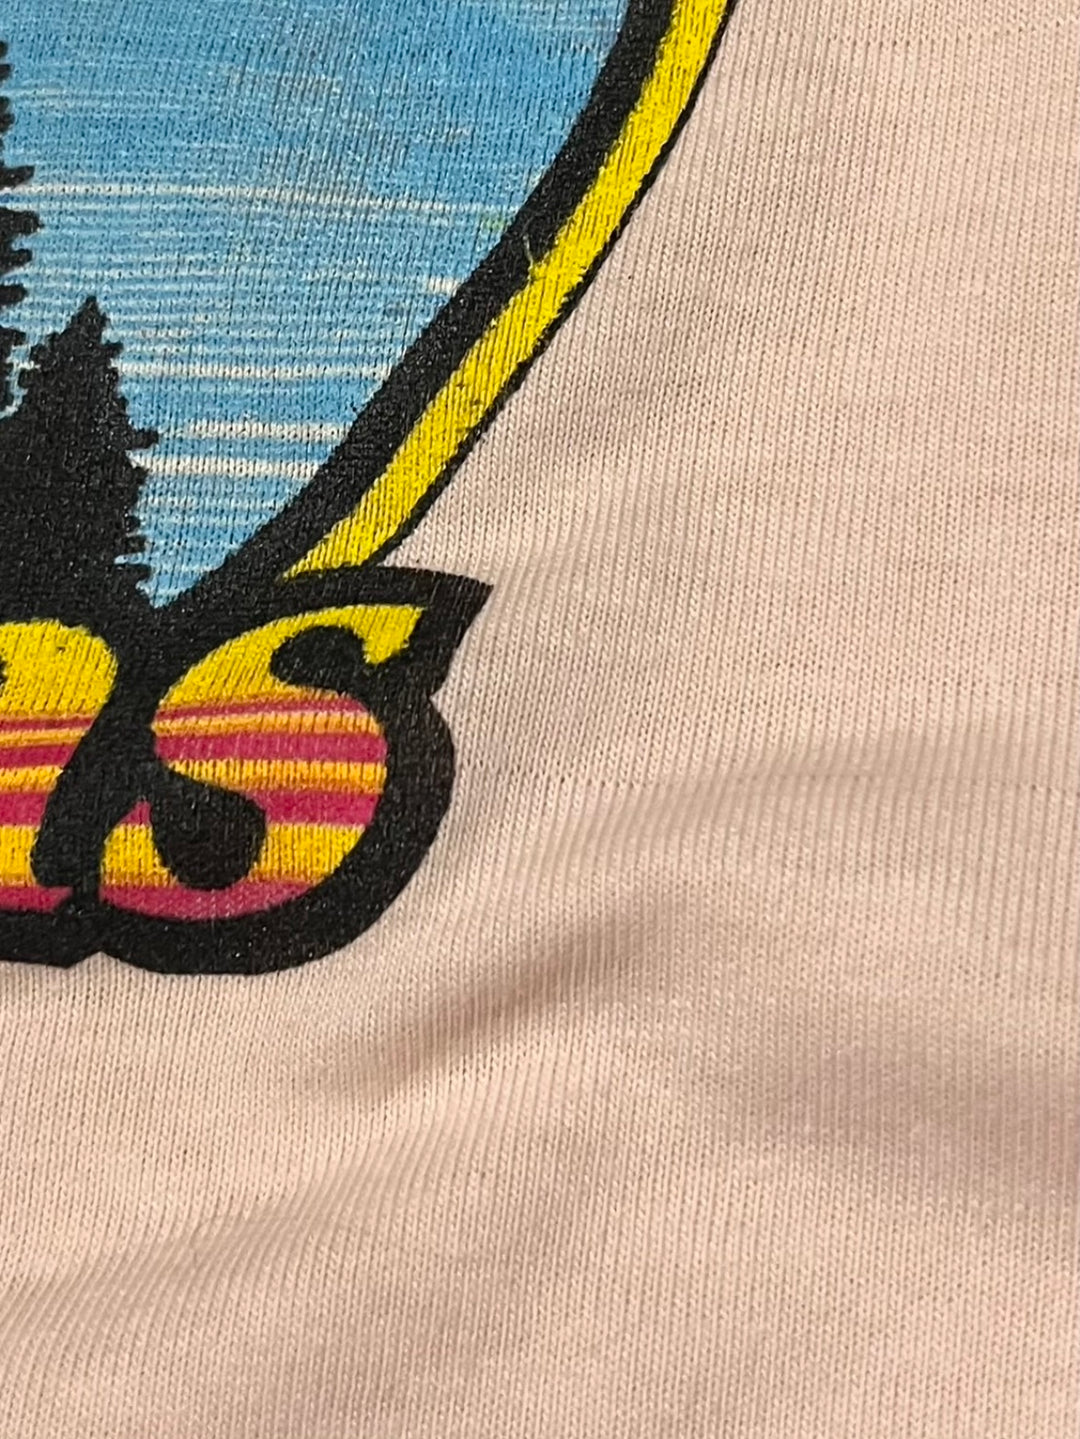 1980-90s USA made Smoky Mountains T-shirt